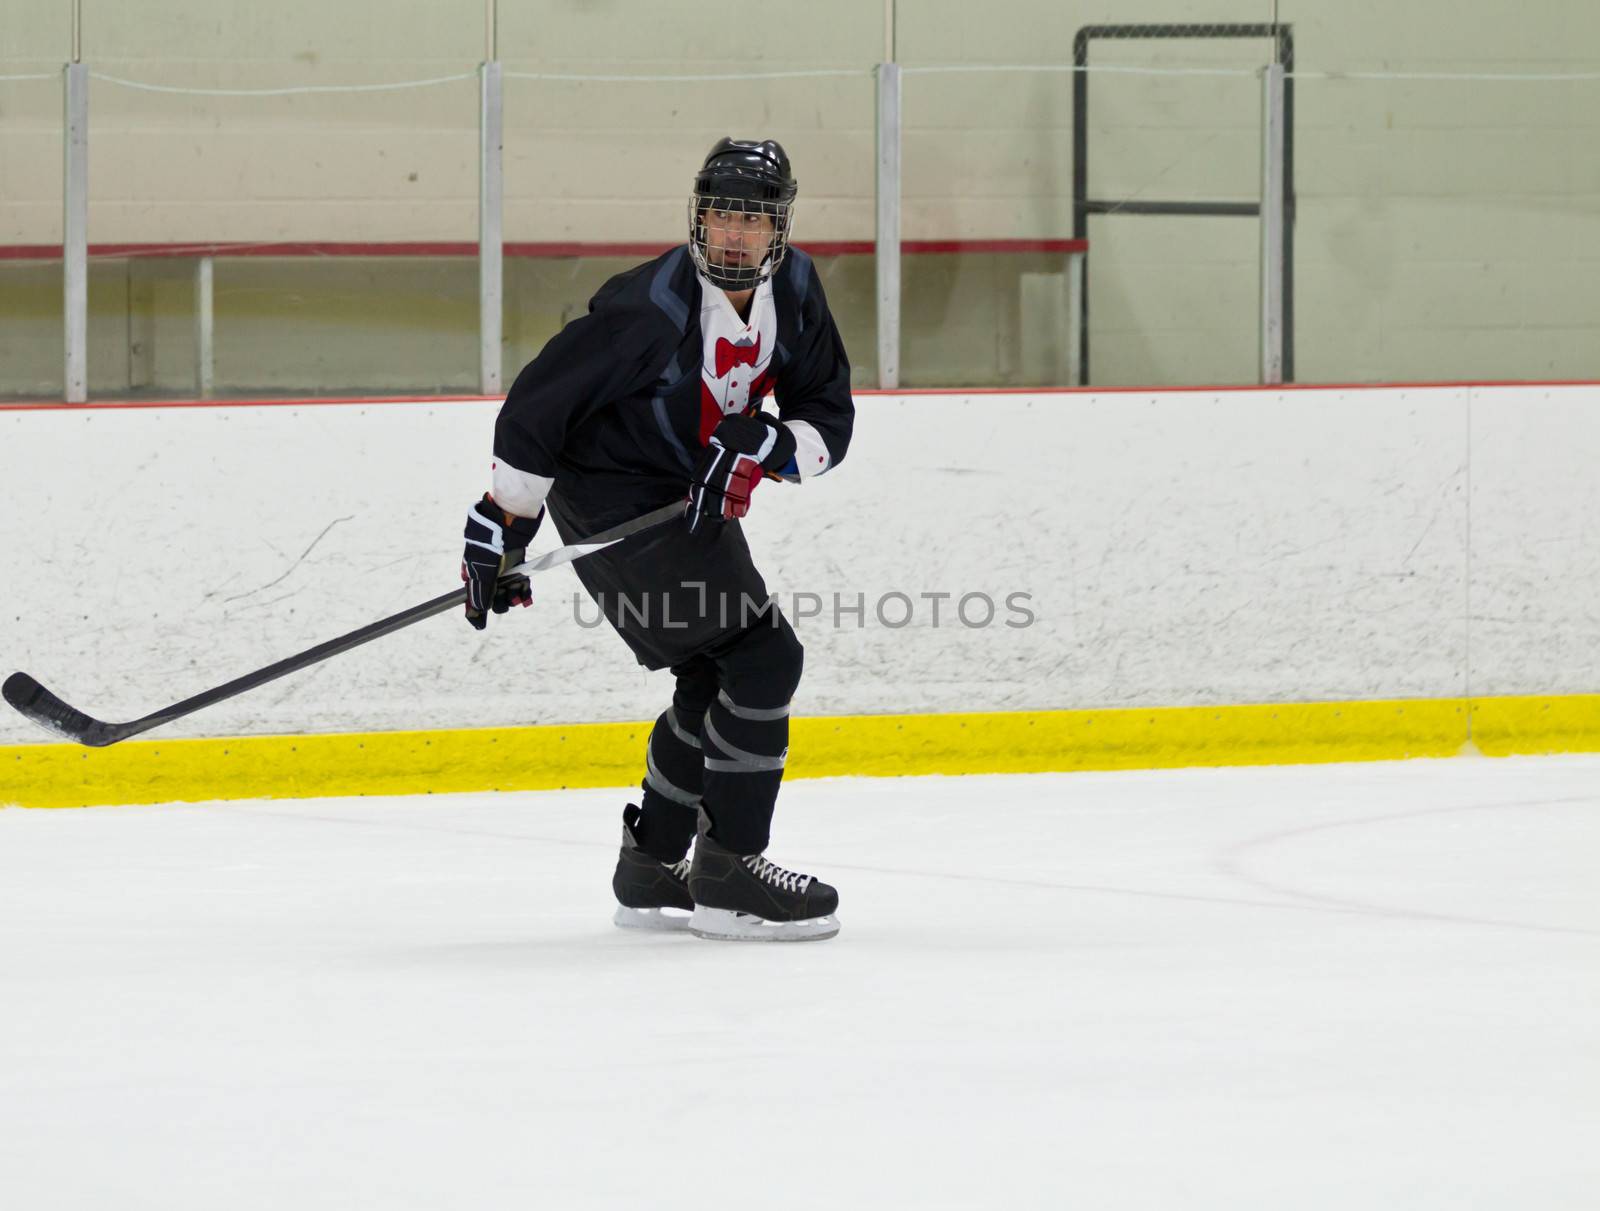 Male playing ice hockey